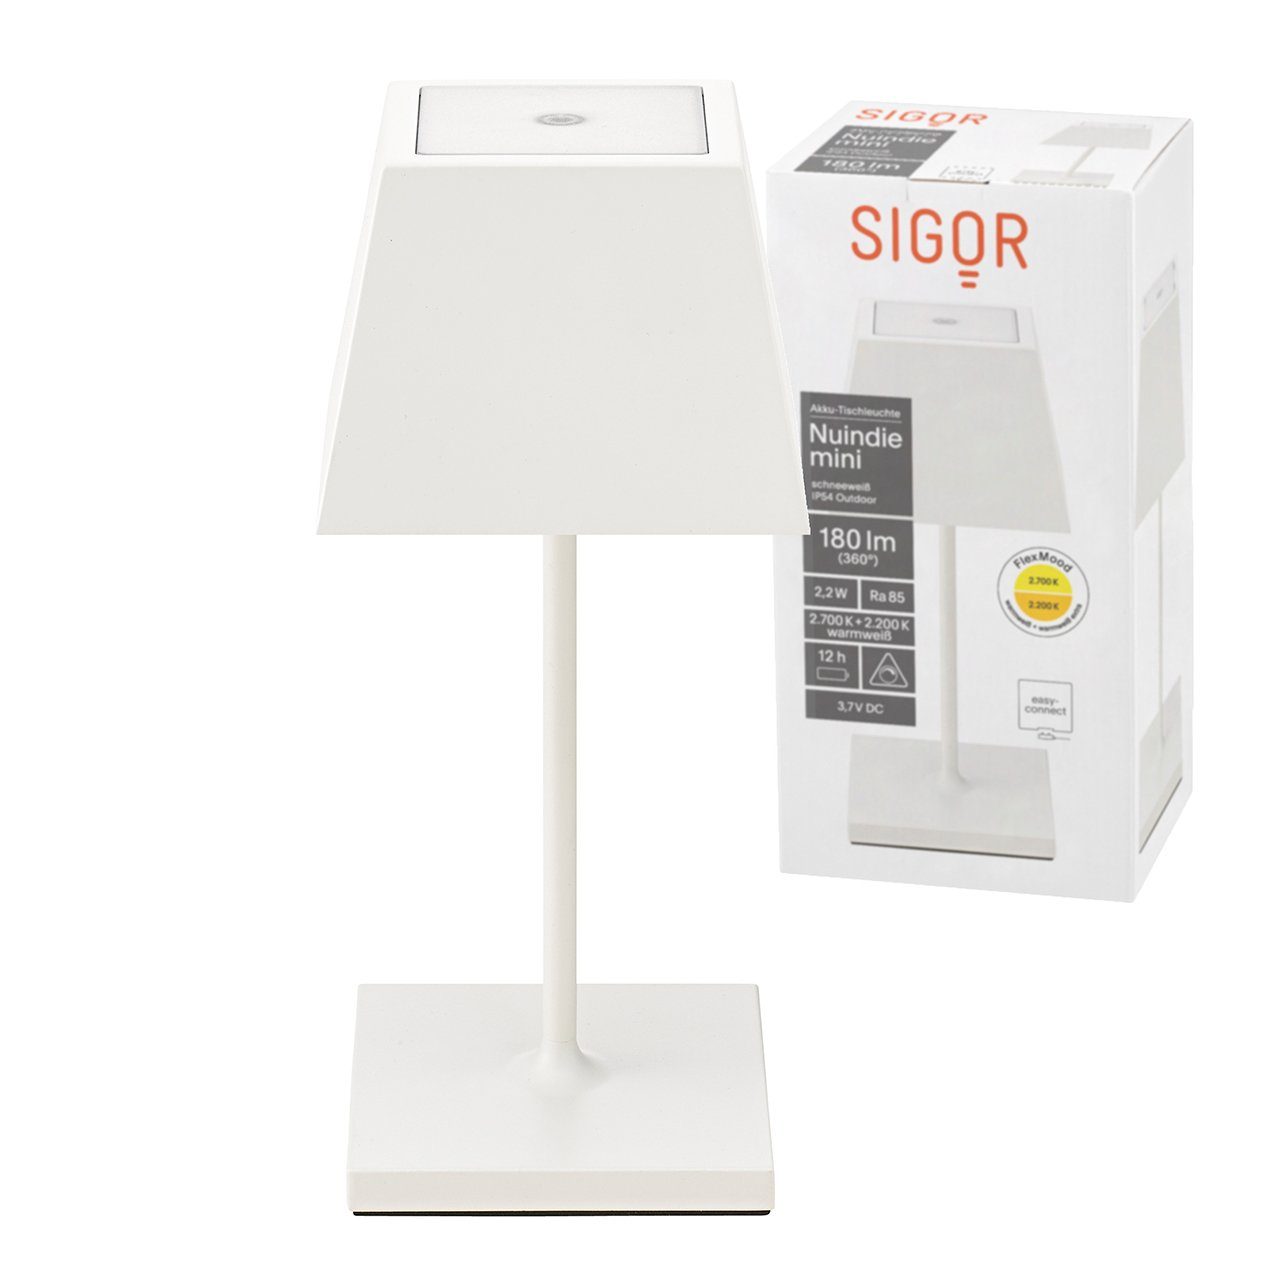 SIGOR LED Tischleuchte Eckige Akku-Tischlampe Nuindie Mini, LED fest integriert, Warmweiß, Extra Warmweiß, kabellose Tischleuchte, 25x10.5x10 cm